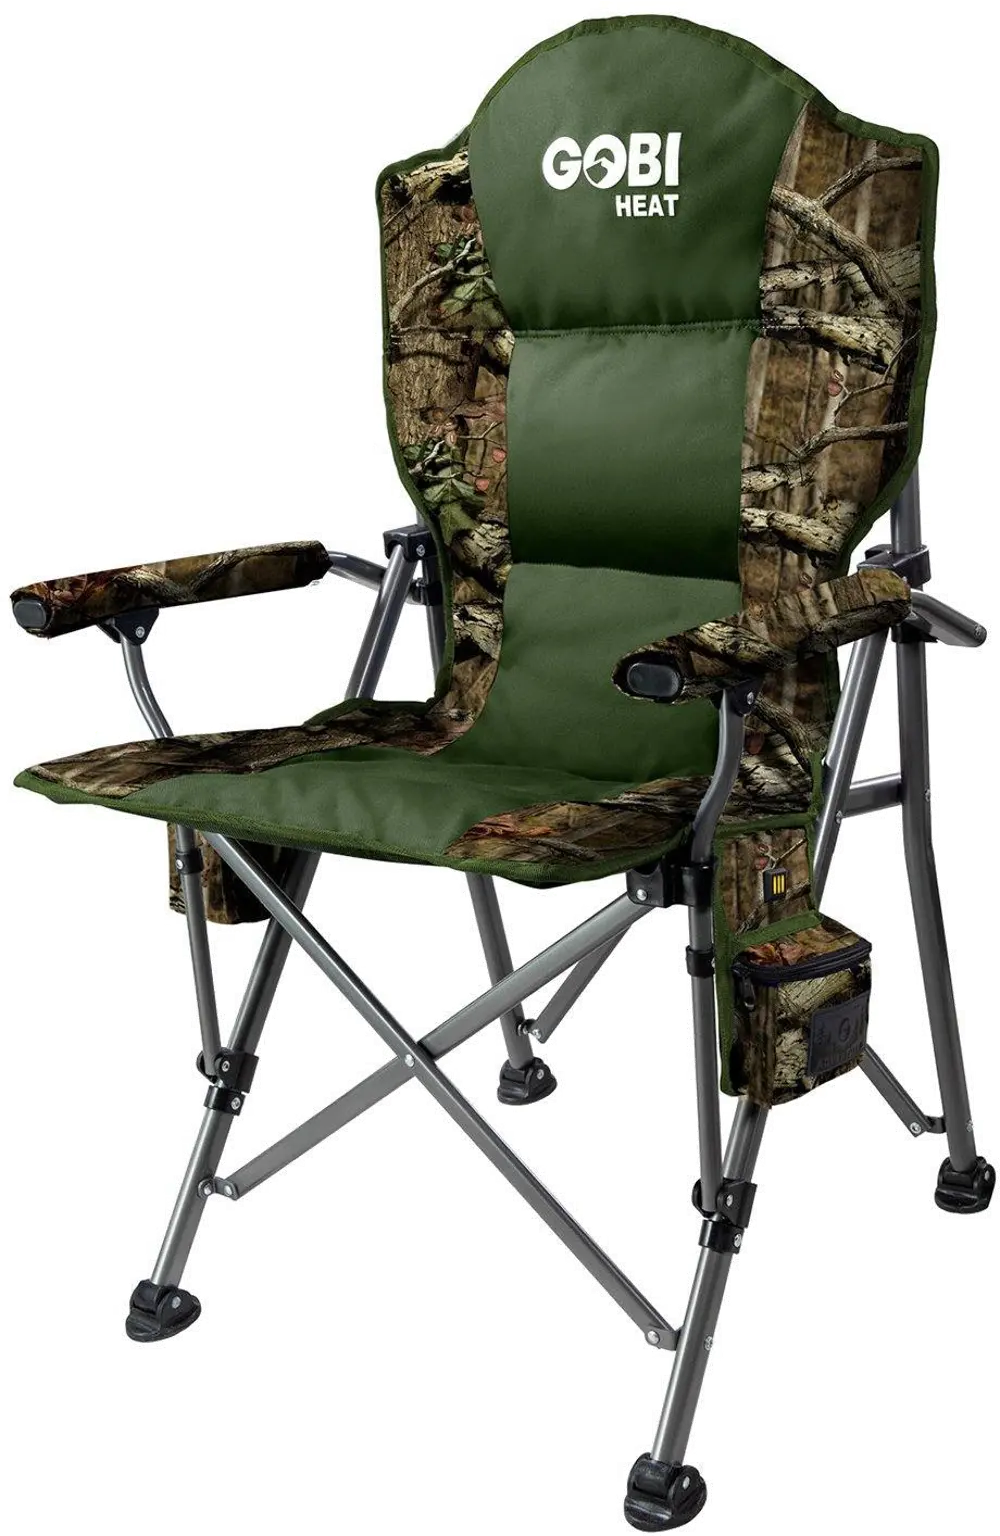 Gobi Heat Camo Terrain Heated Camping Chair-1